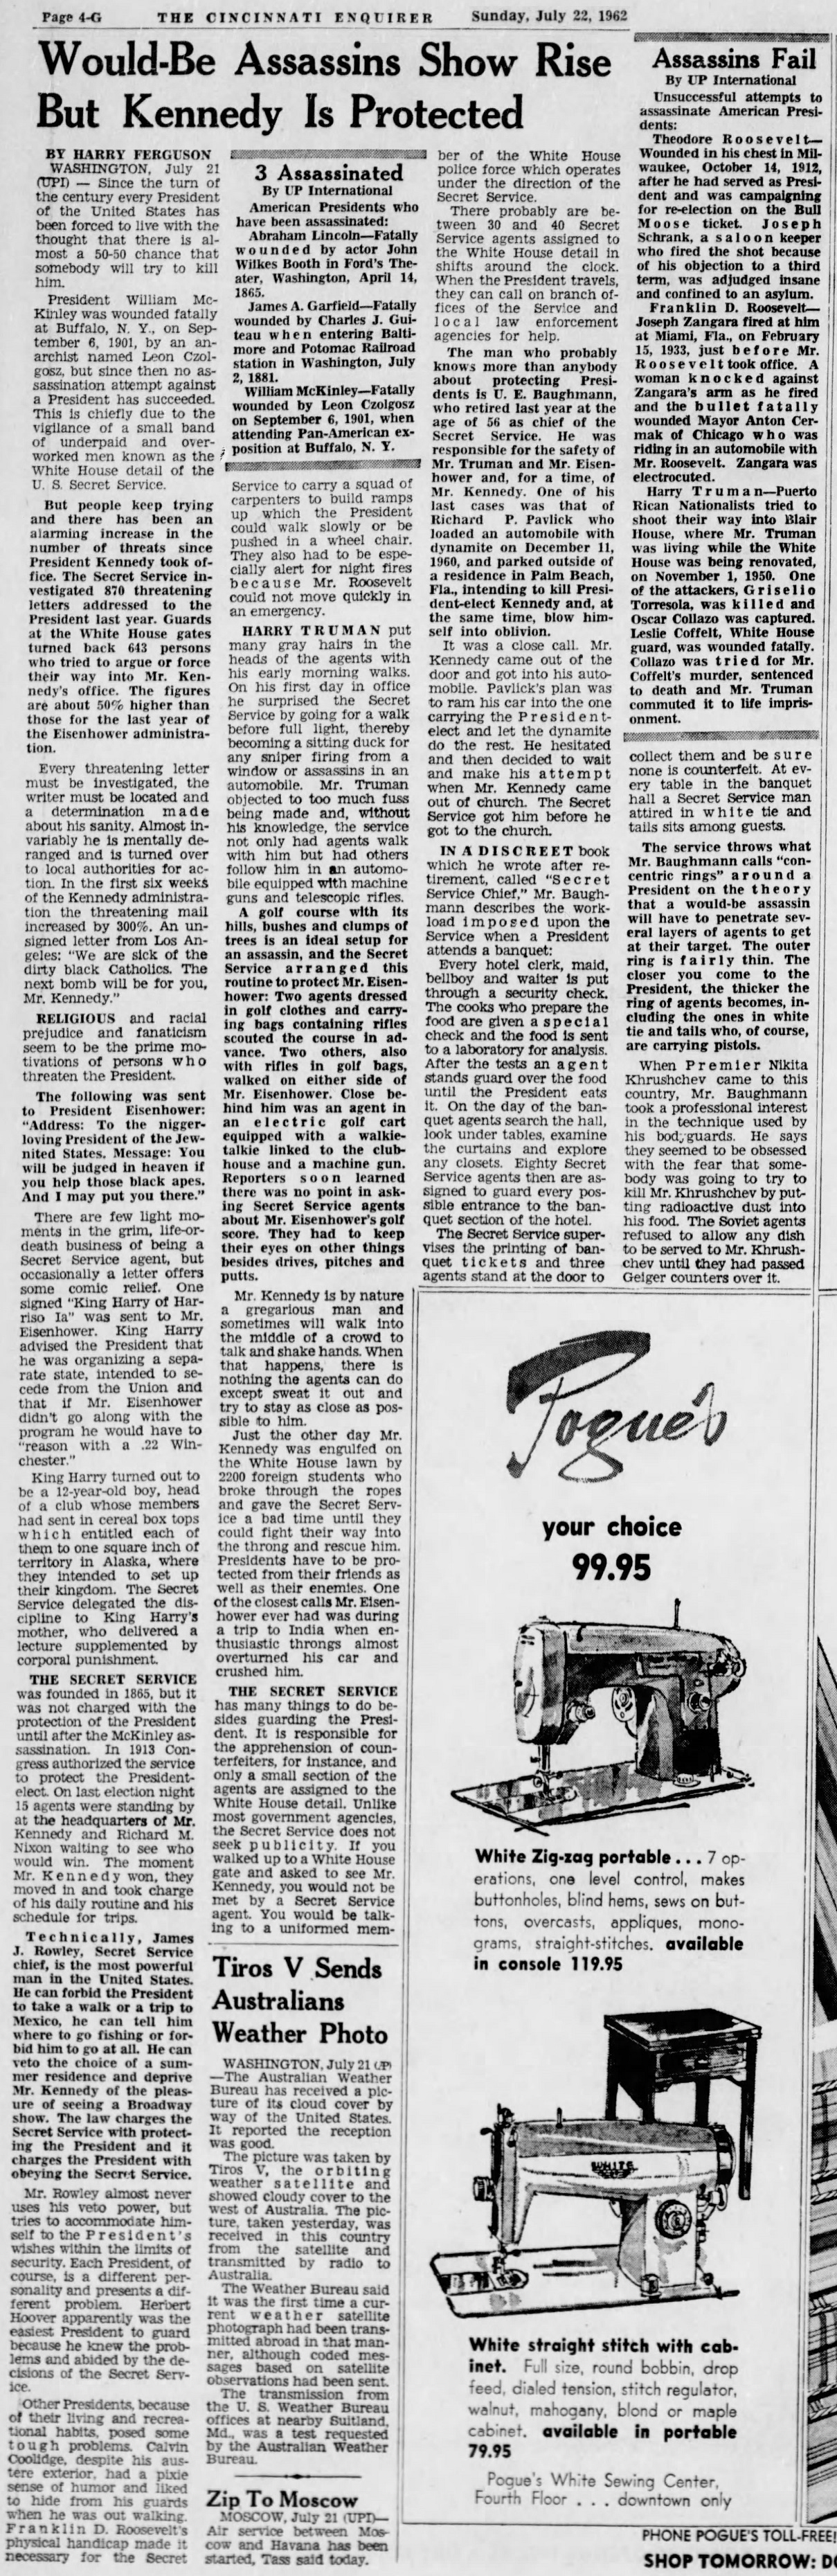 The-Cincinnati-Enquirer-Jul-22-1962%20(W